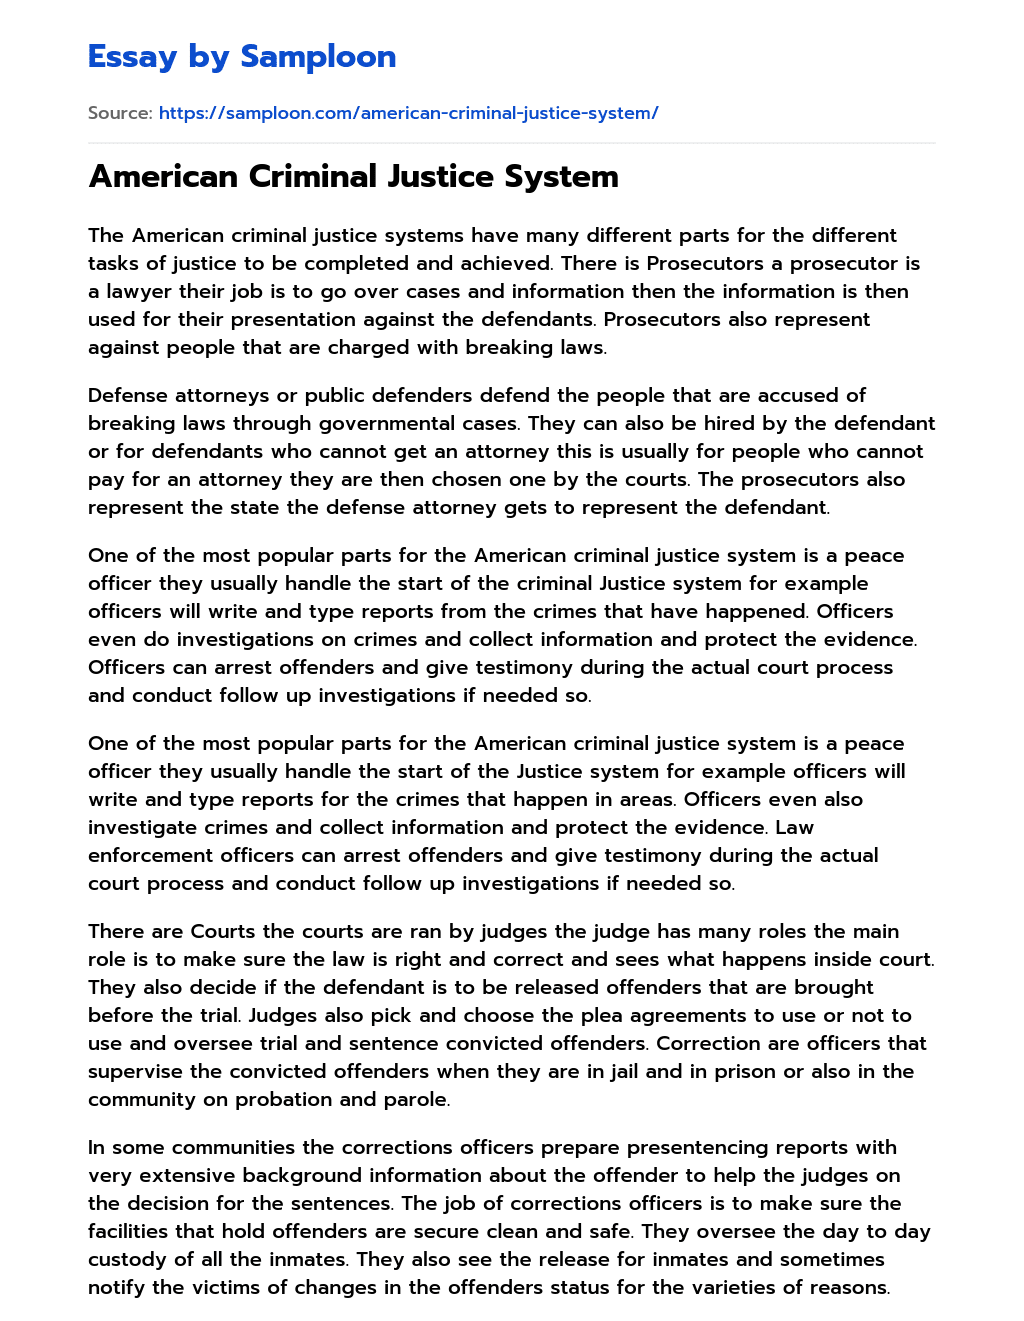 American Criminal Justice System essay